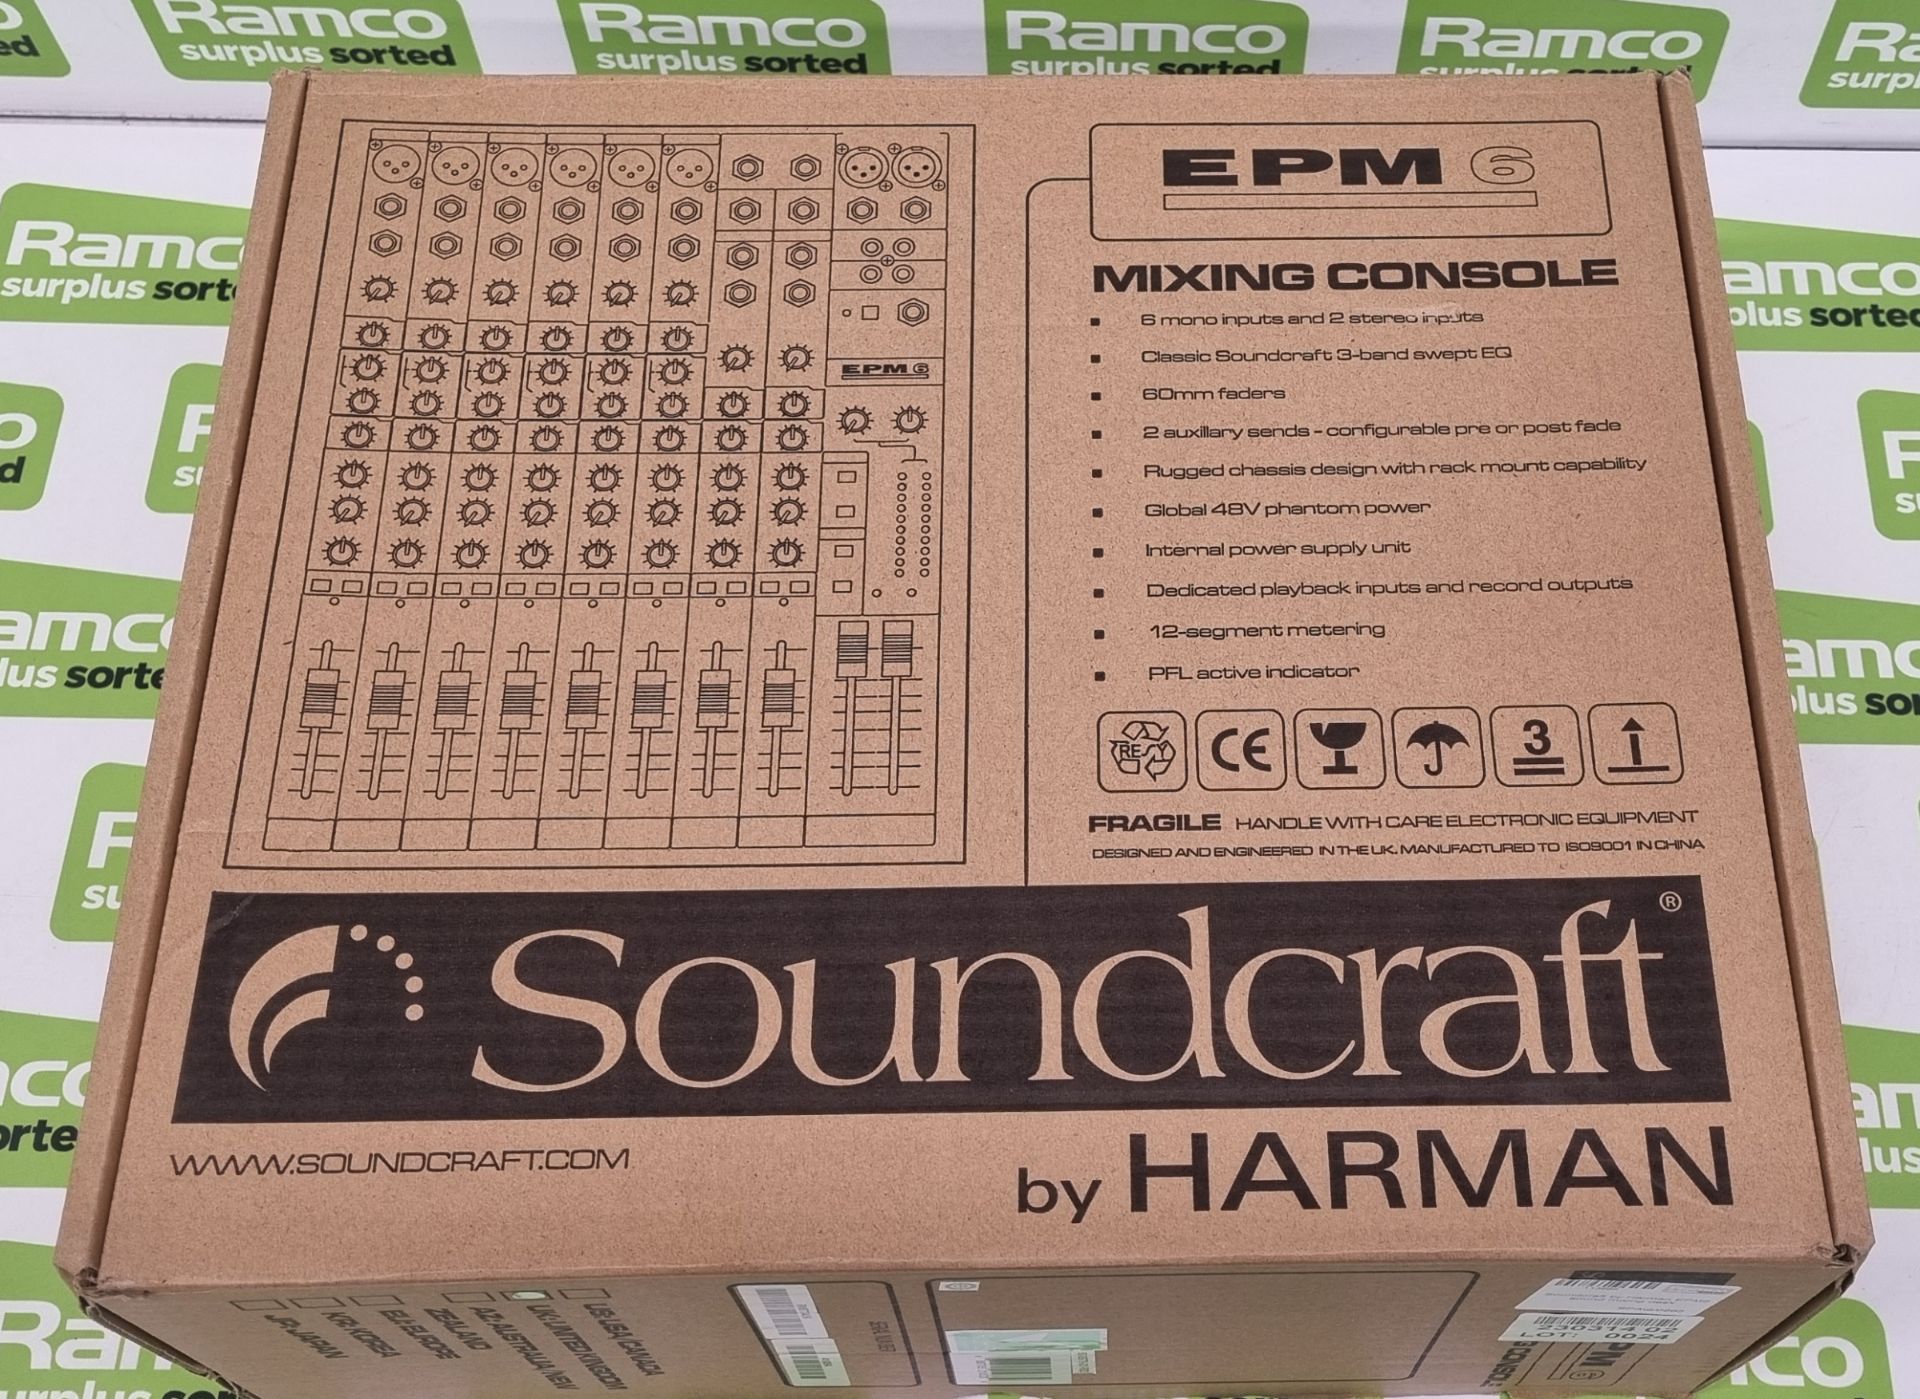 Soundcraft by Harman EPM6 sound mixing desk - Image 2 of 10